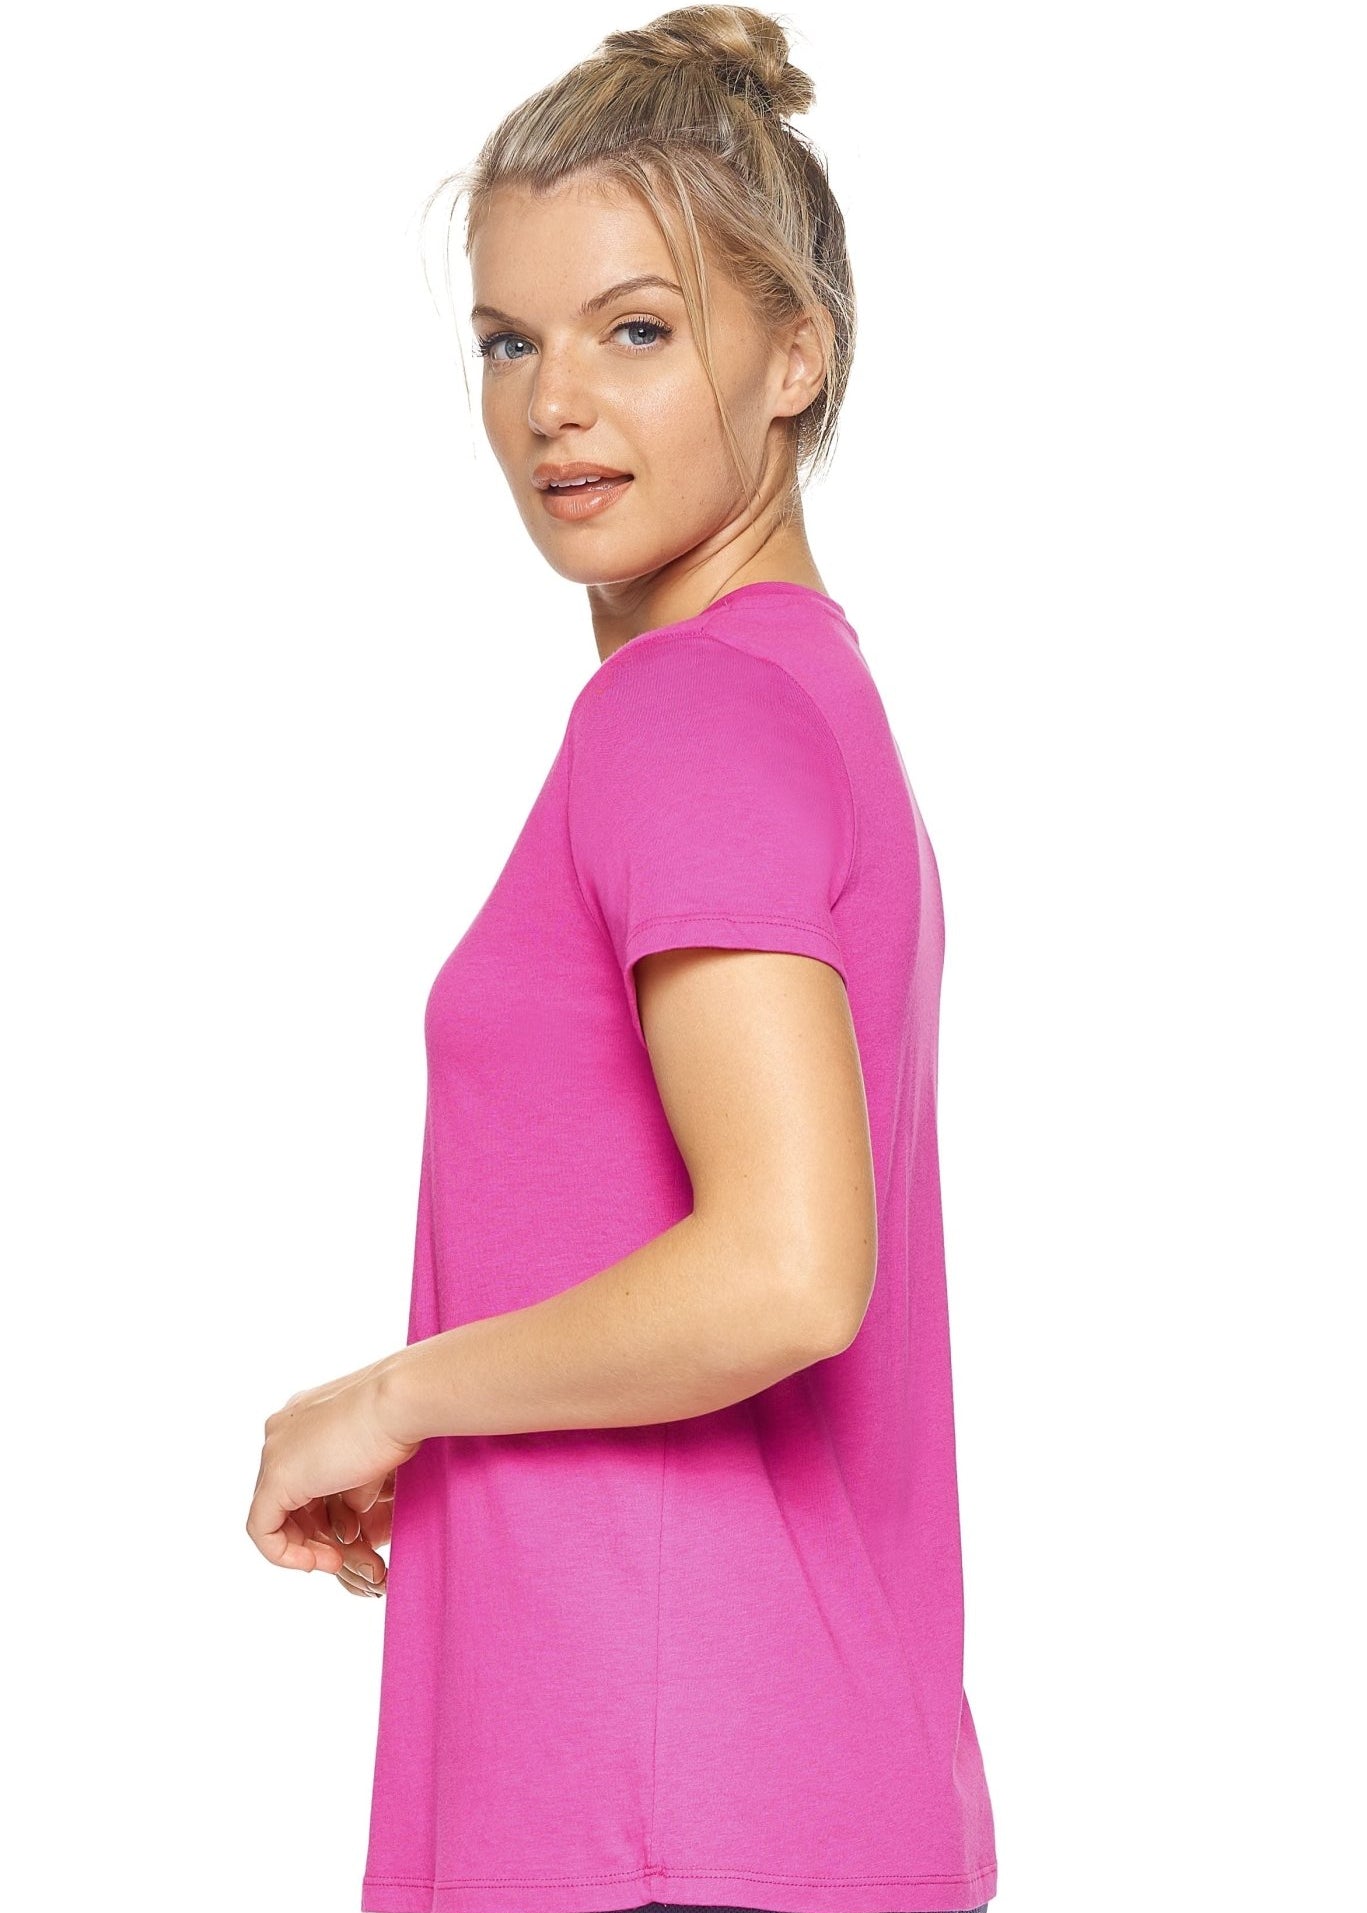 Expert Brand MoCA Plant Based V-Neck T-Shirt - DressbarnActivewear